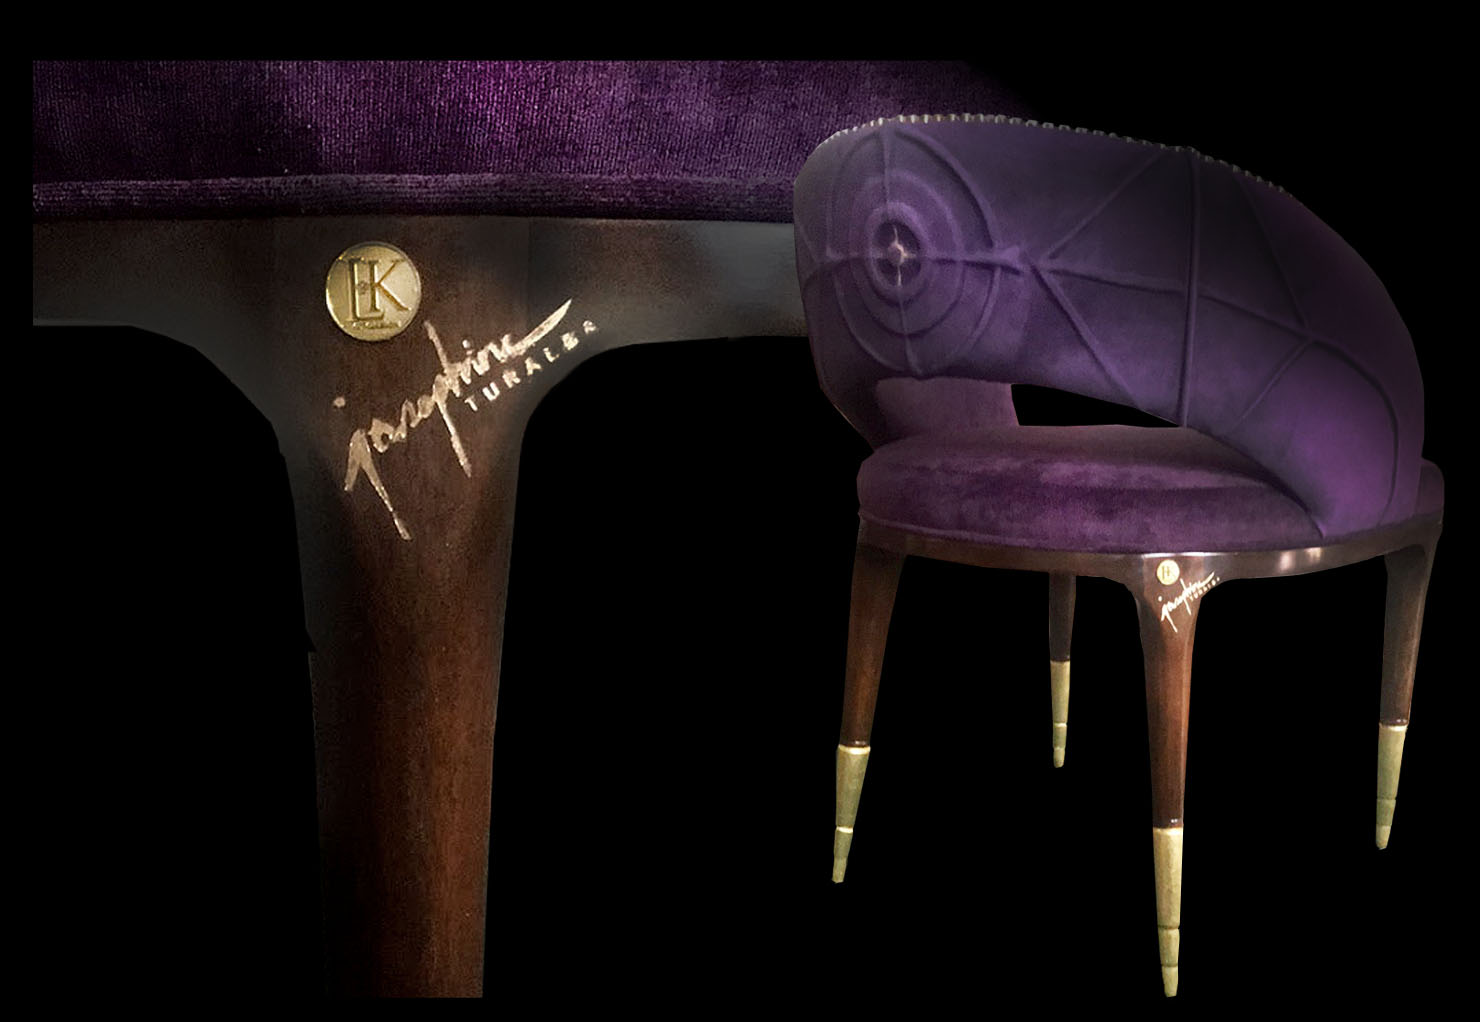 Table - J. Turalba Collaboration - Luxury-furniture-details - THOMAS & GEORGE ARTISAN FURNITURE - Thomas & George Fine Furniture Inc.